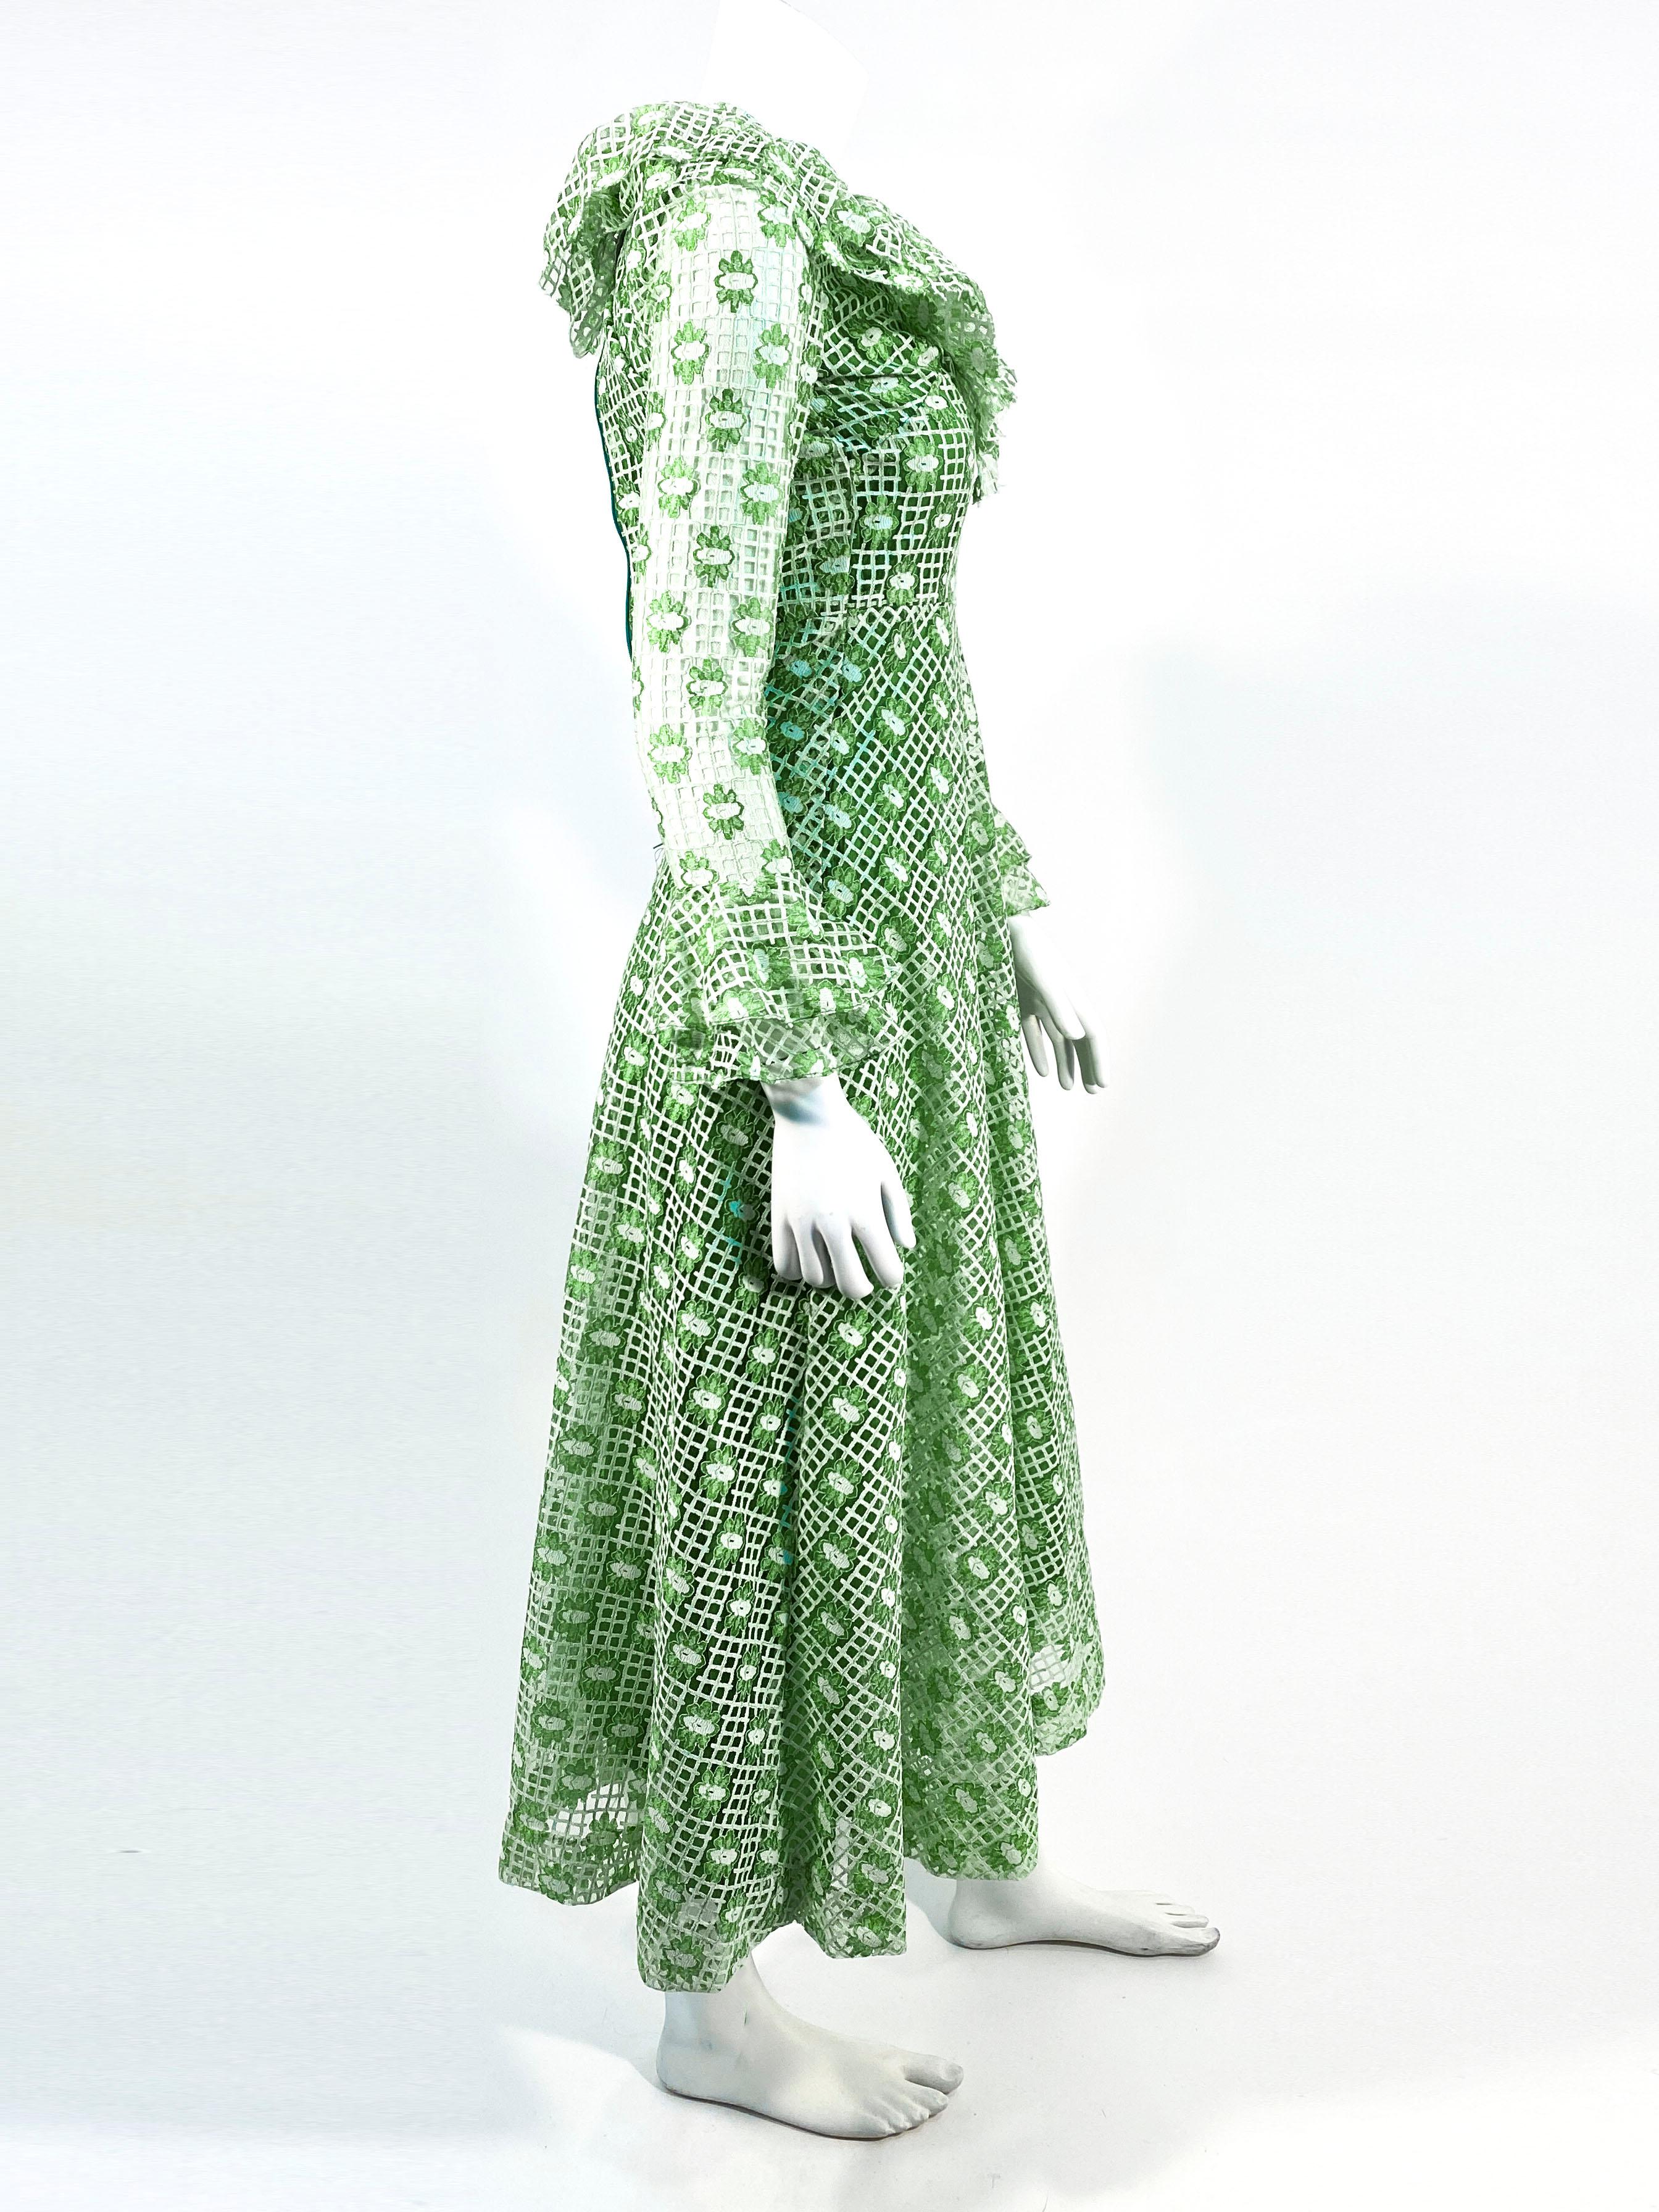 I. Magnin - Robe en dentelle et maille verte, années 1960/1970 Pour femmes en vente